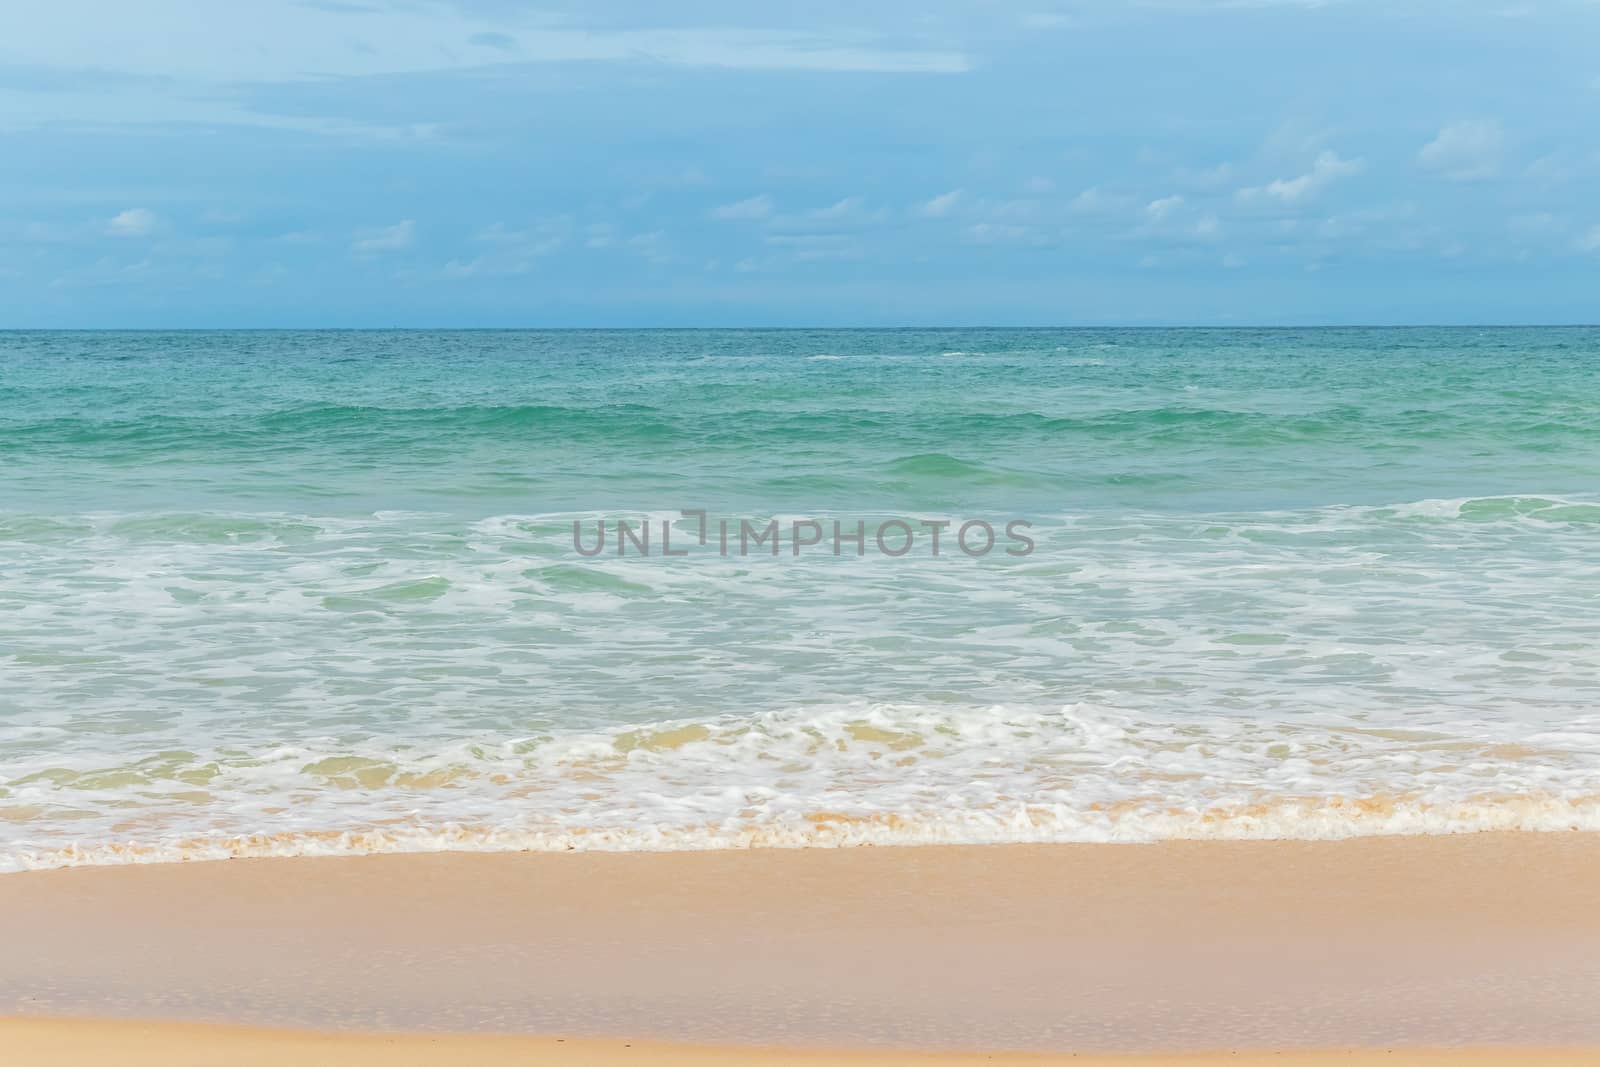 sandy beach blue sky and white formy wave